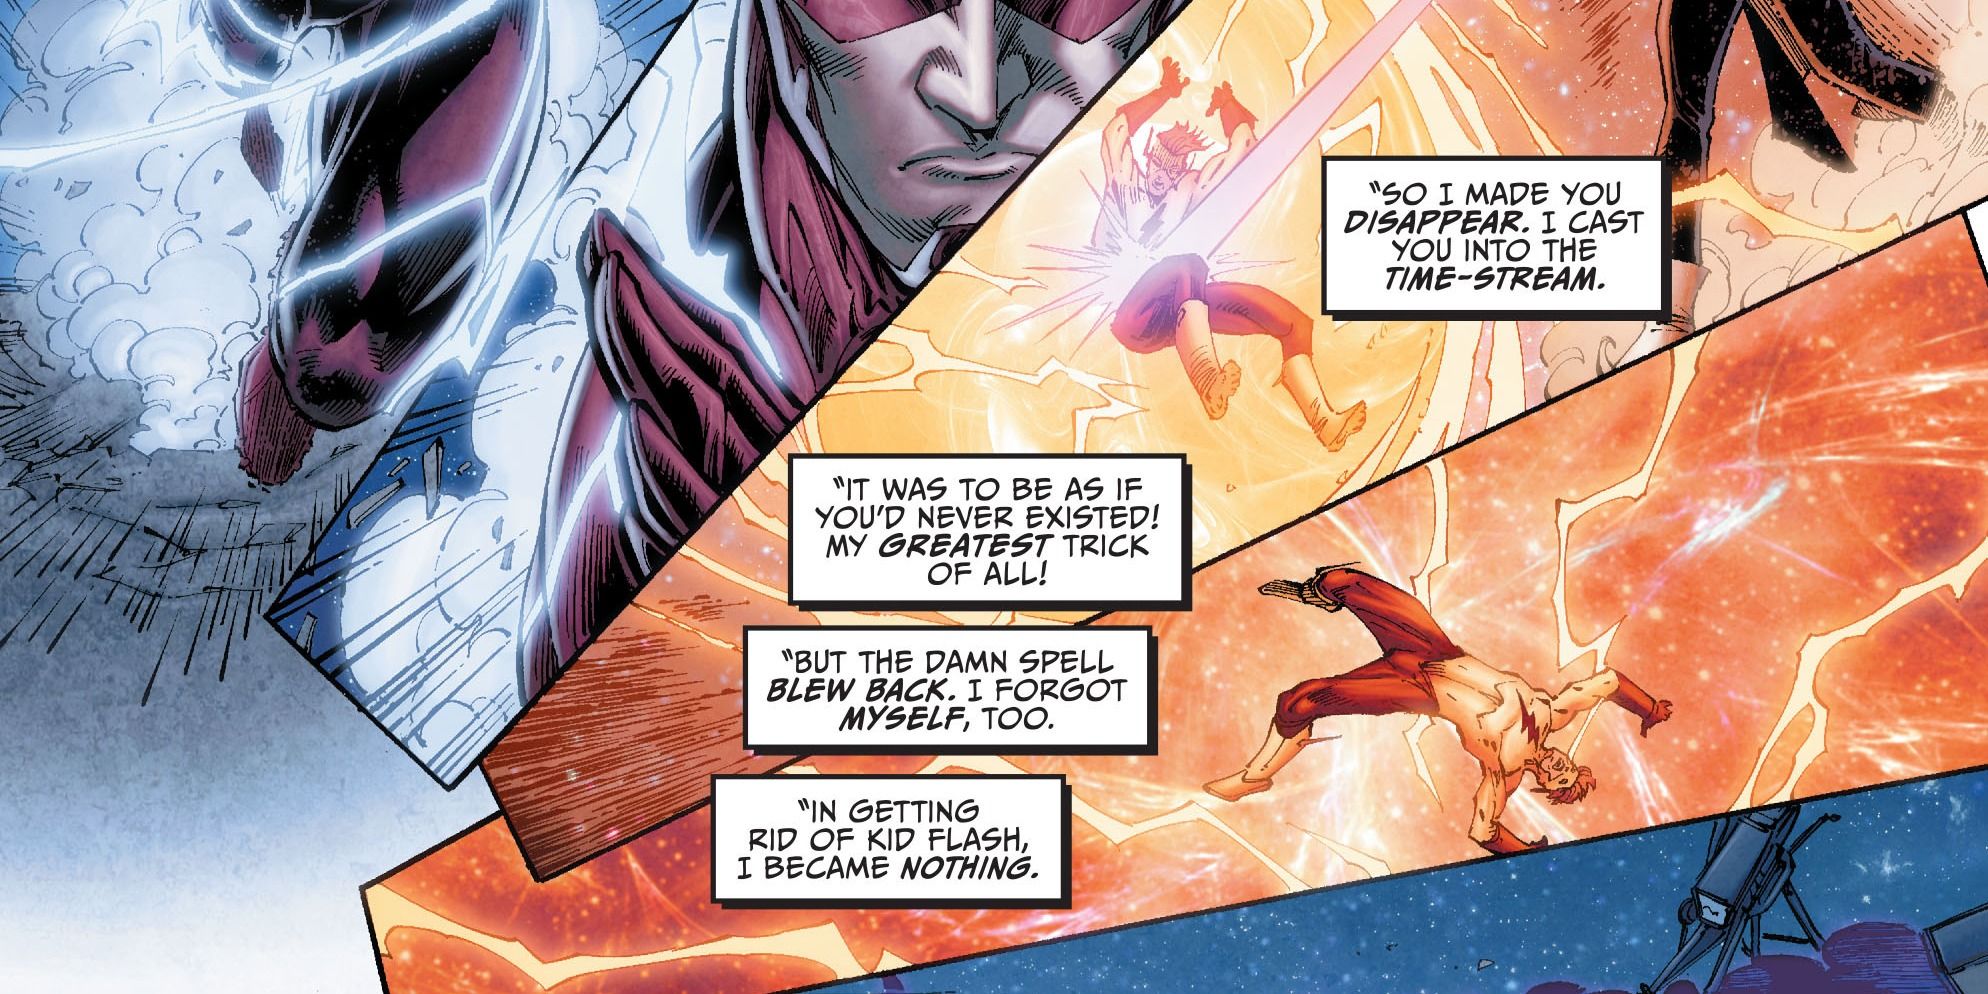 Abra Kadabra and Kid Flash, erased from history